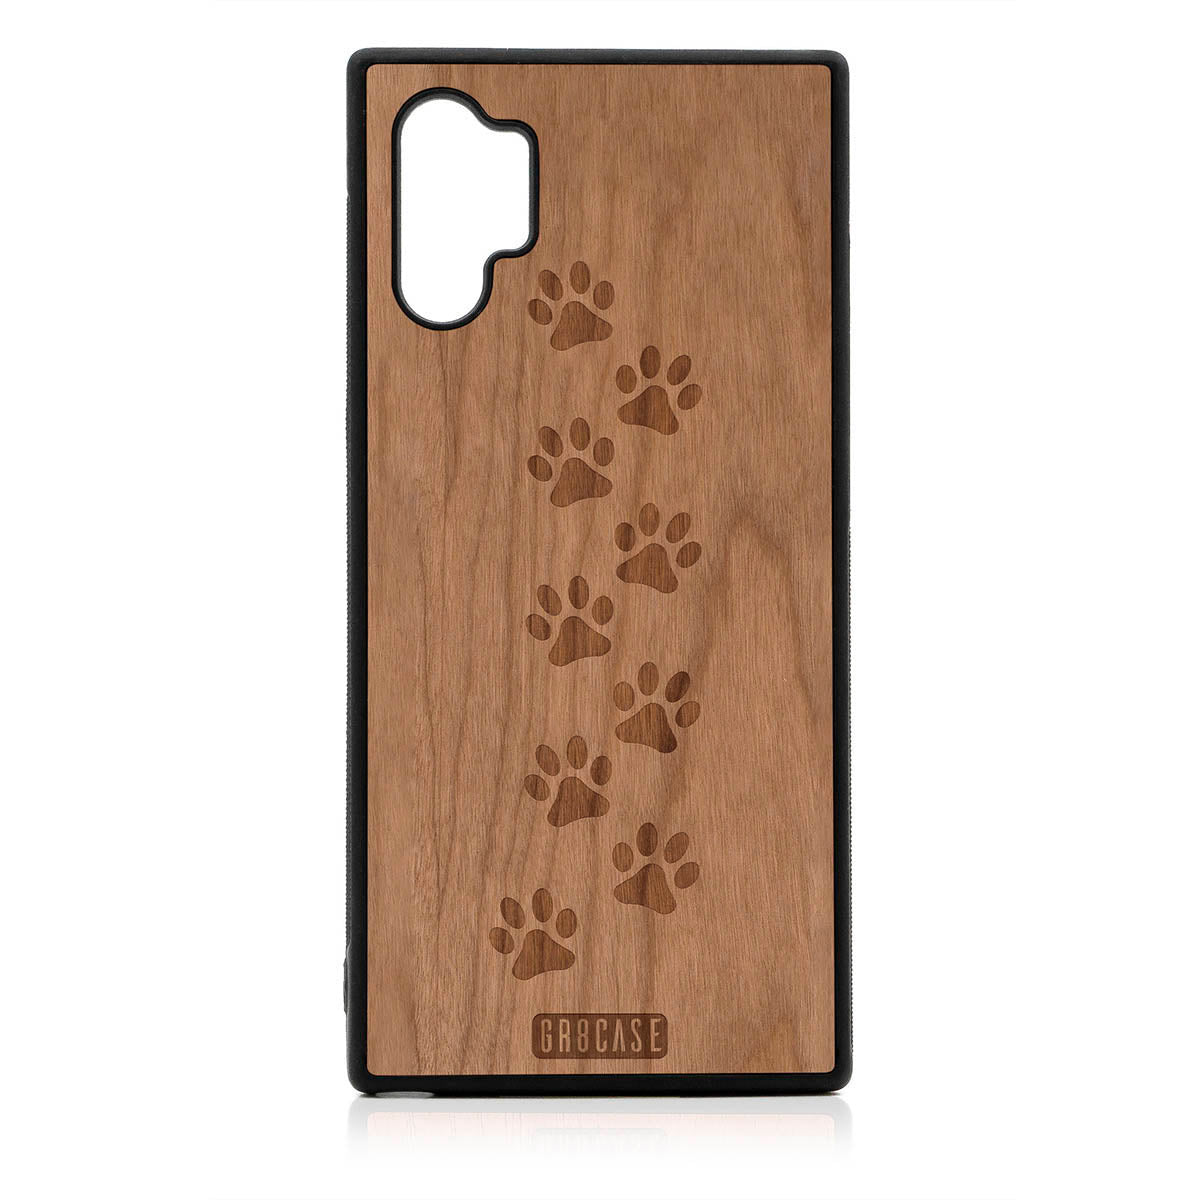 Paw Prints Design Wood Case Samsung Galaxy S10 Plus by GR8CASE